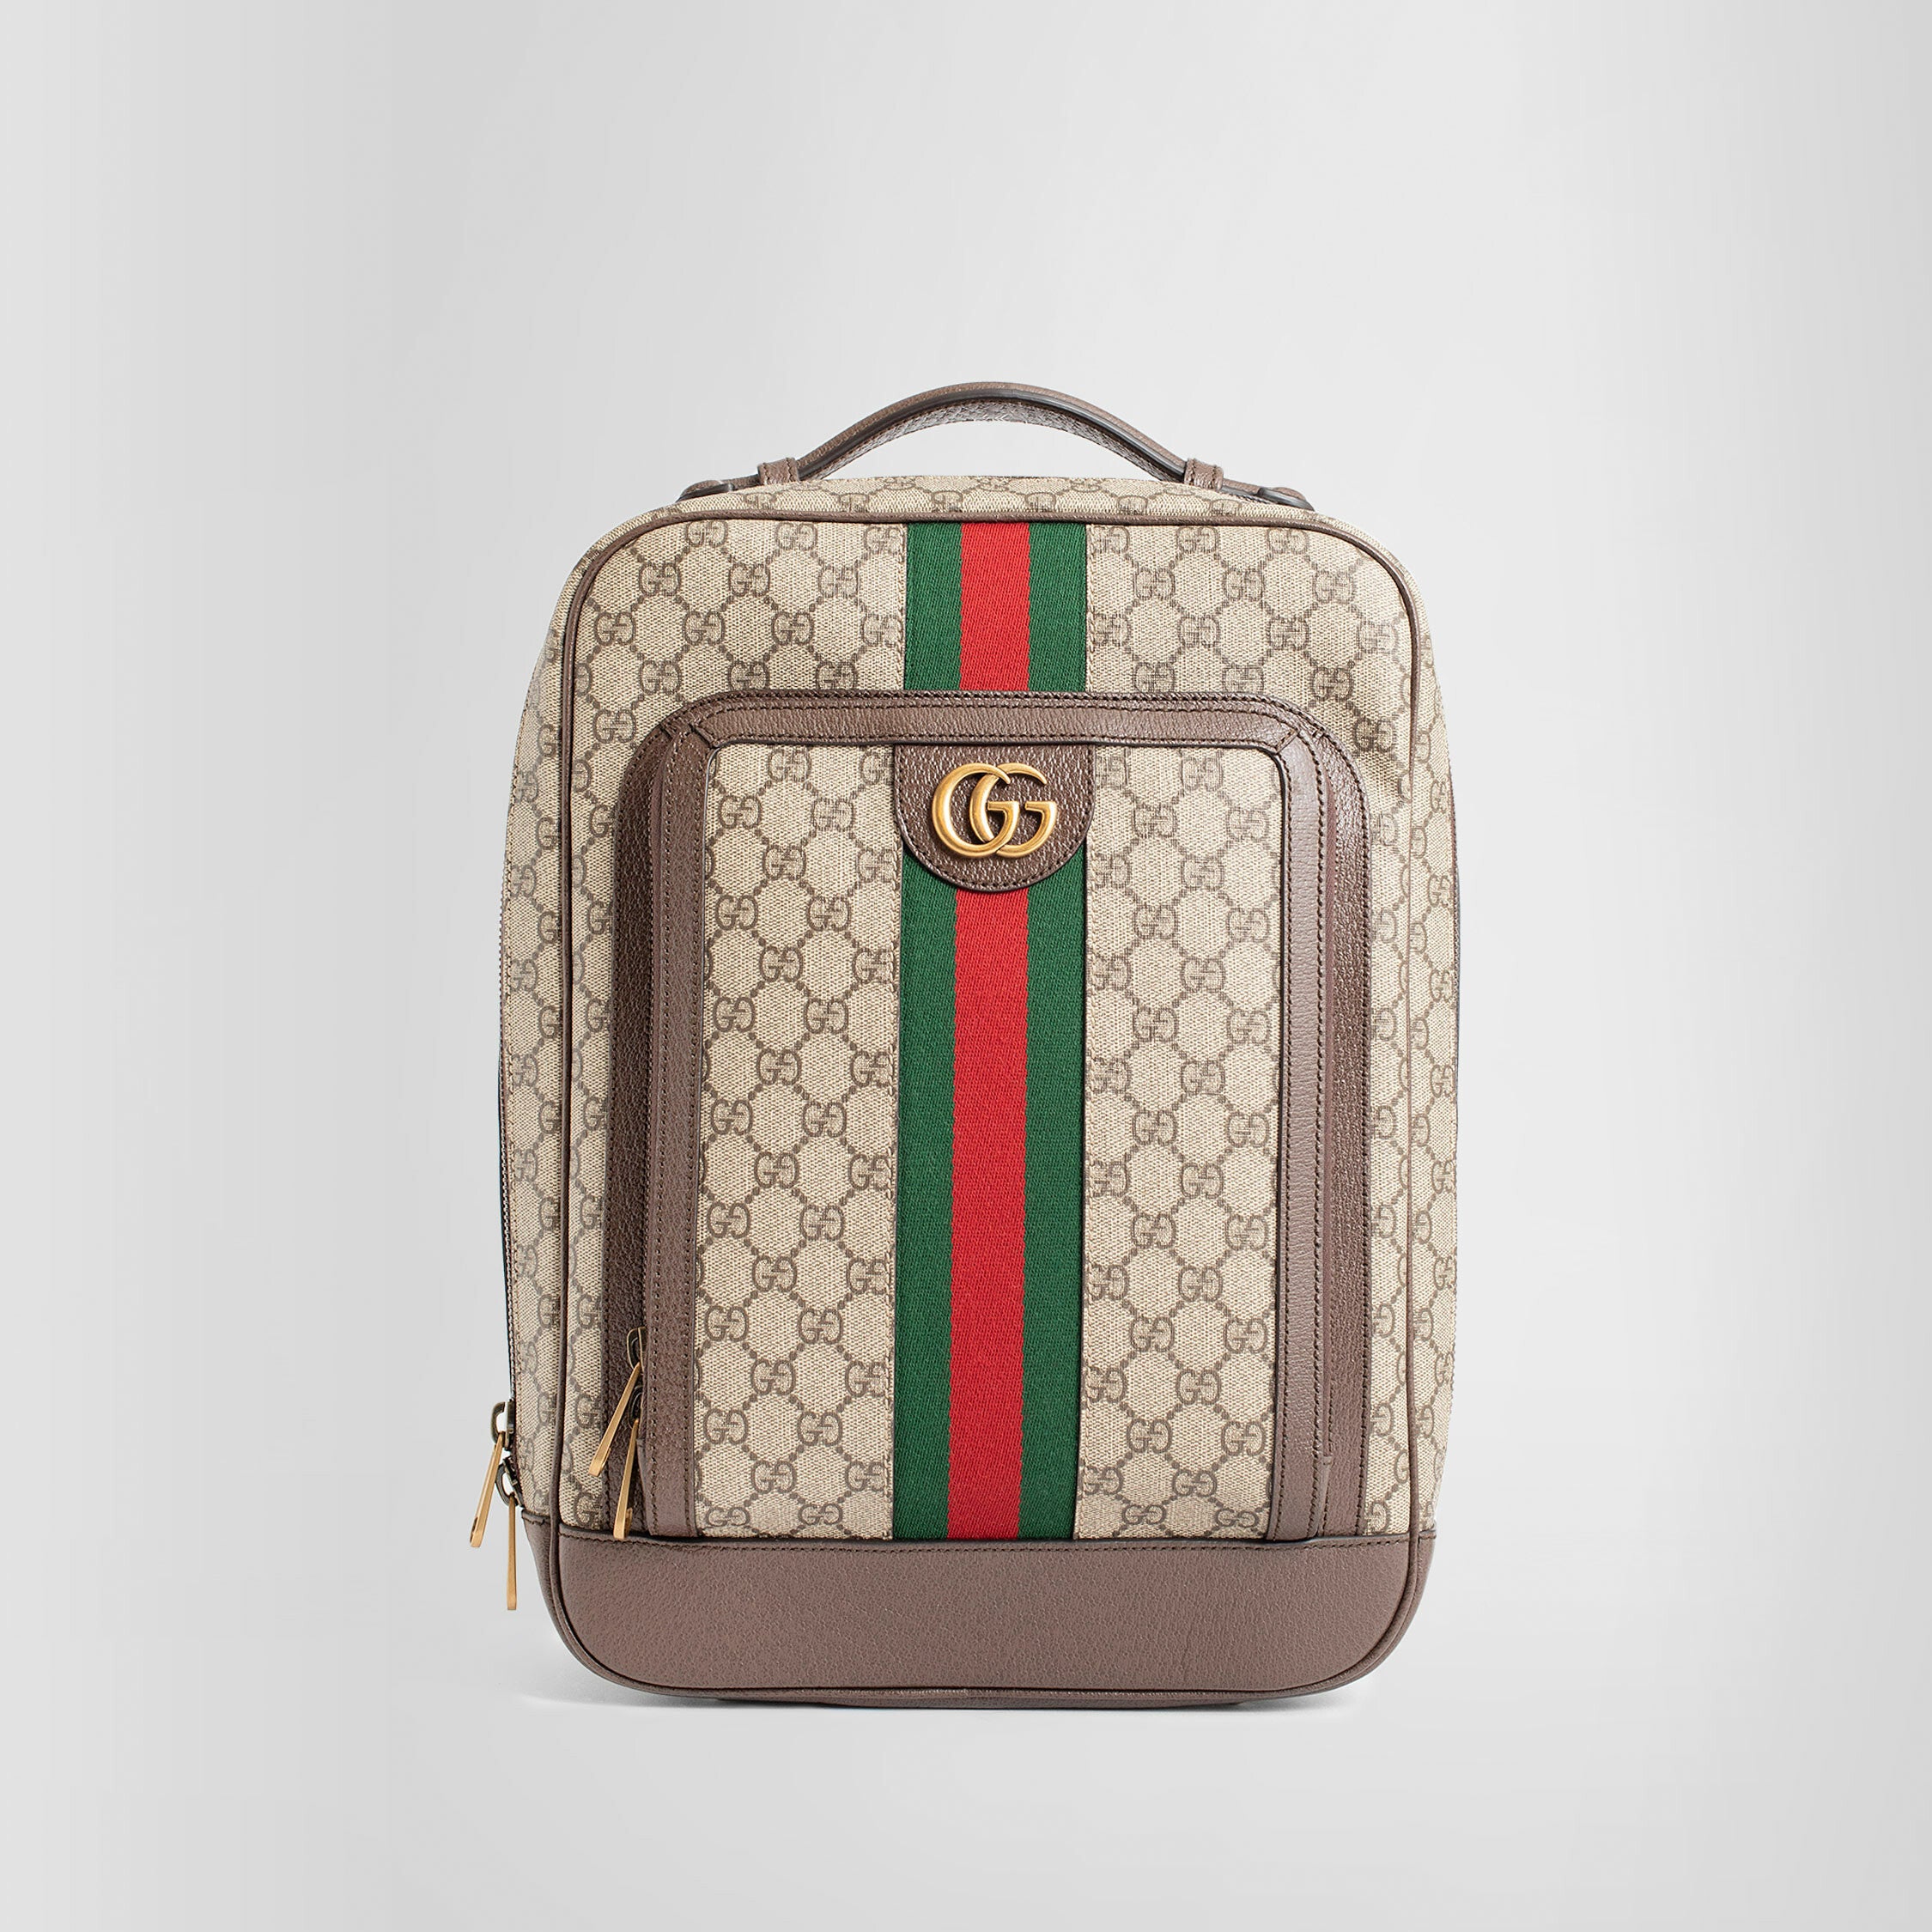 Gucci Men - Bags for Men - Backpacks for Men